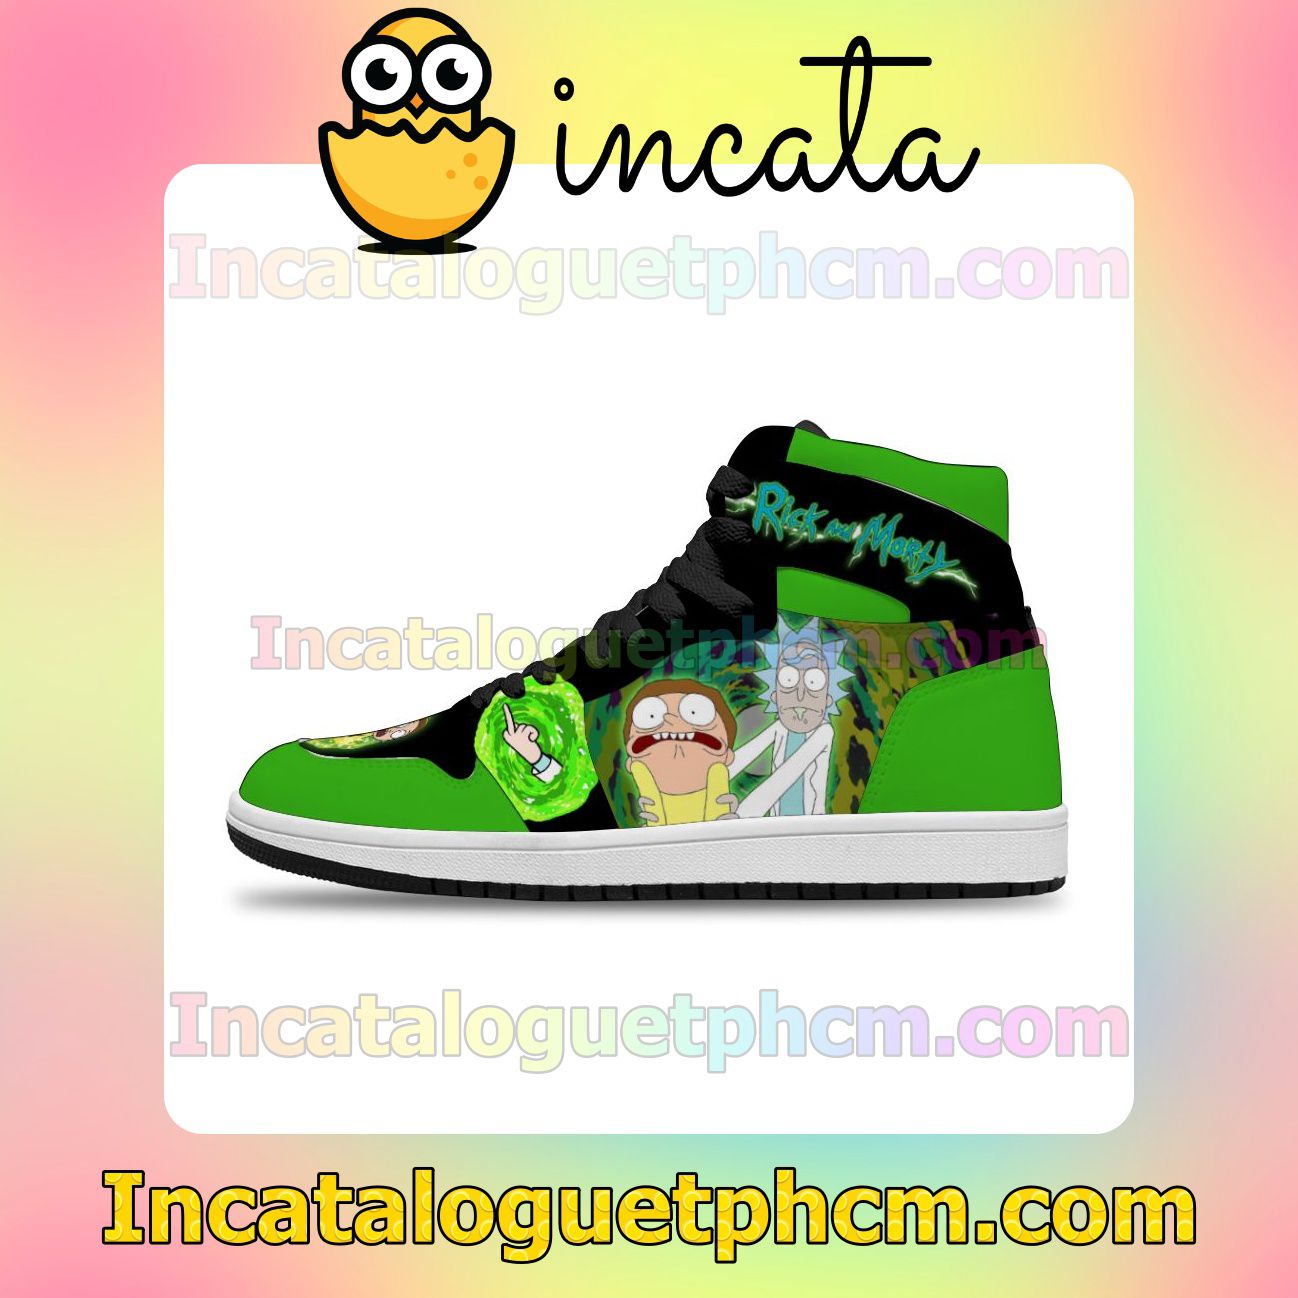 Rick and Morty Air Jordan 1 Inspired Shoes